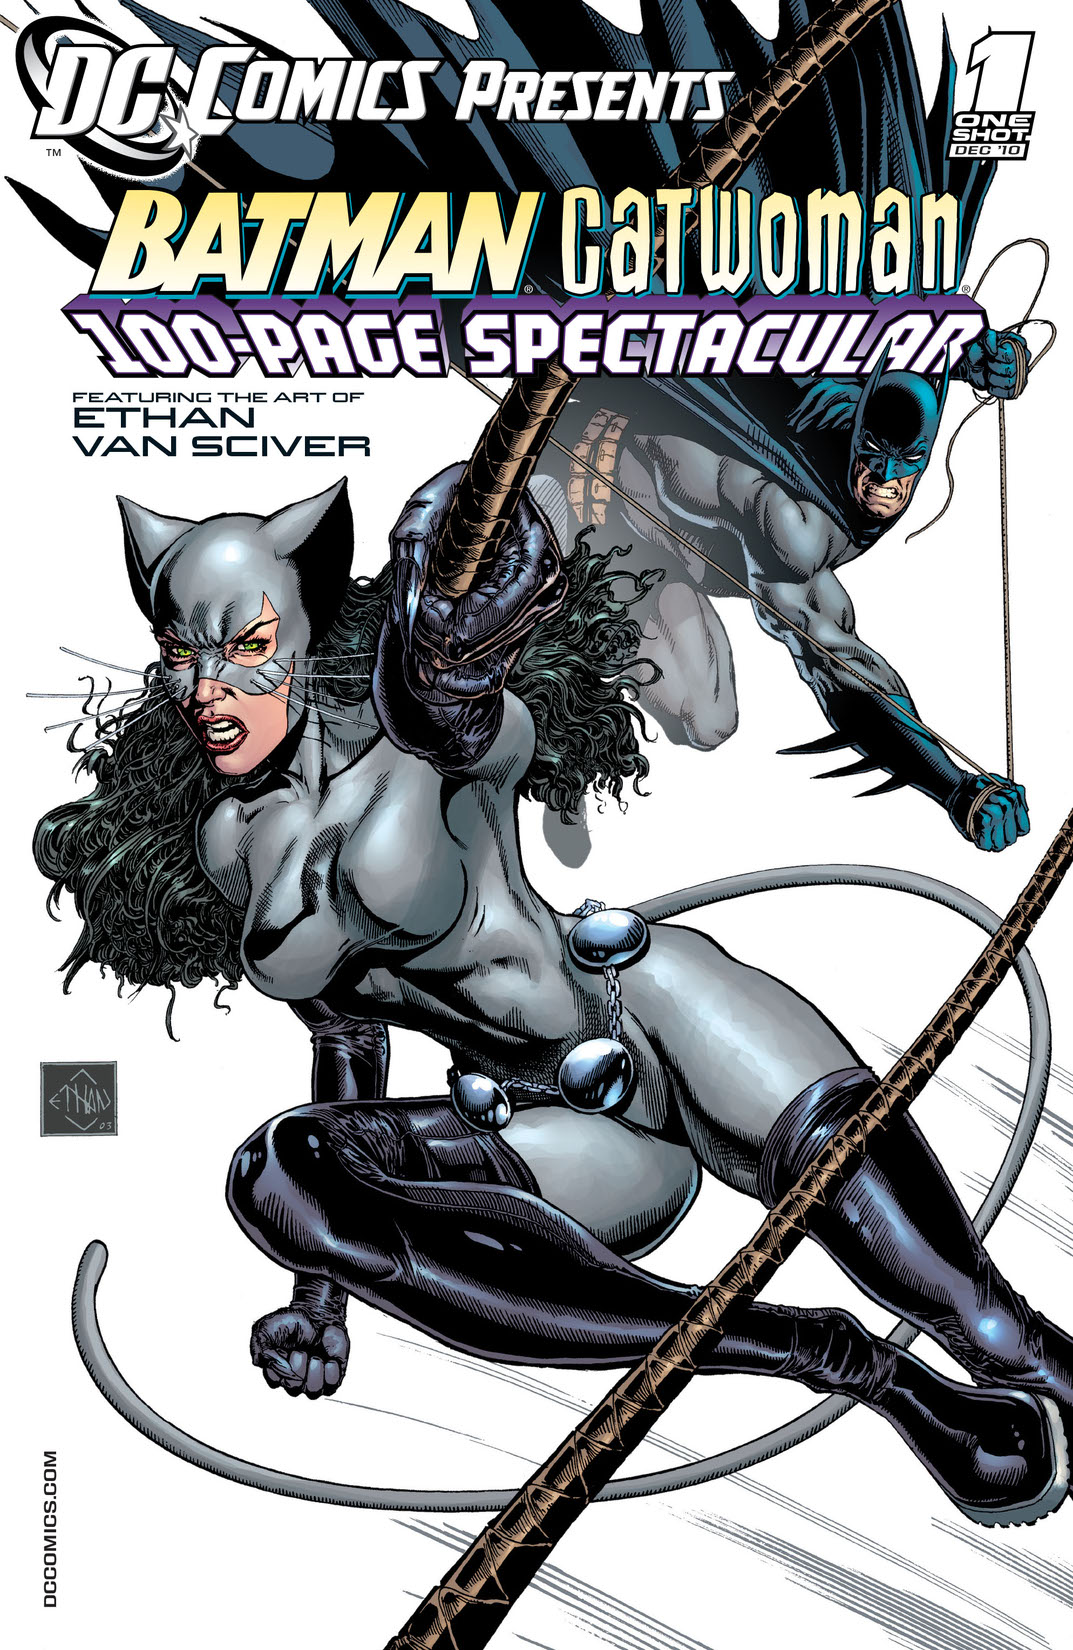 DC Comics Presents: Batman Catwoman (2010-) #1 preview images